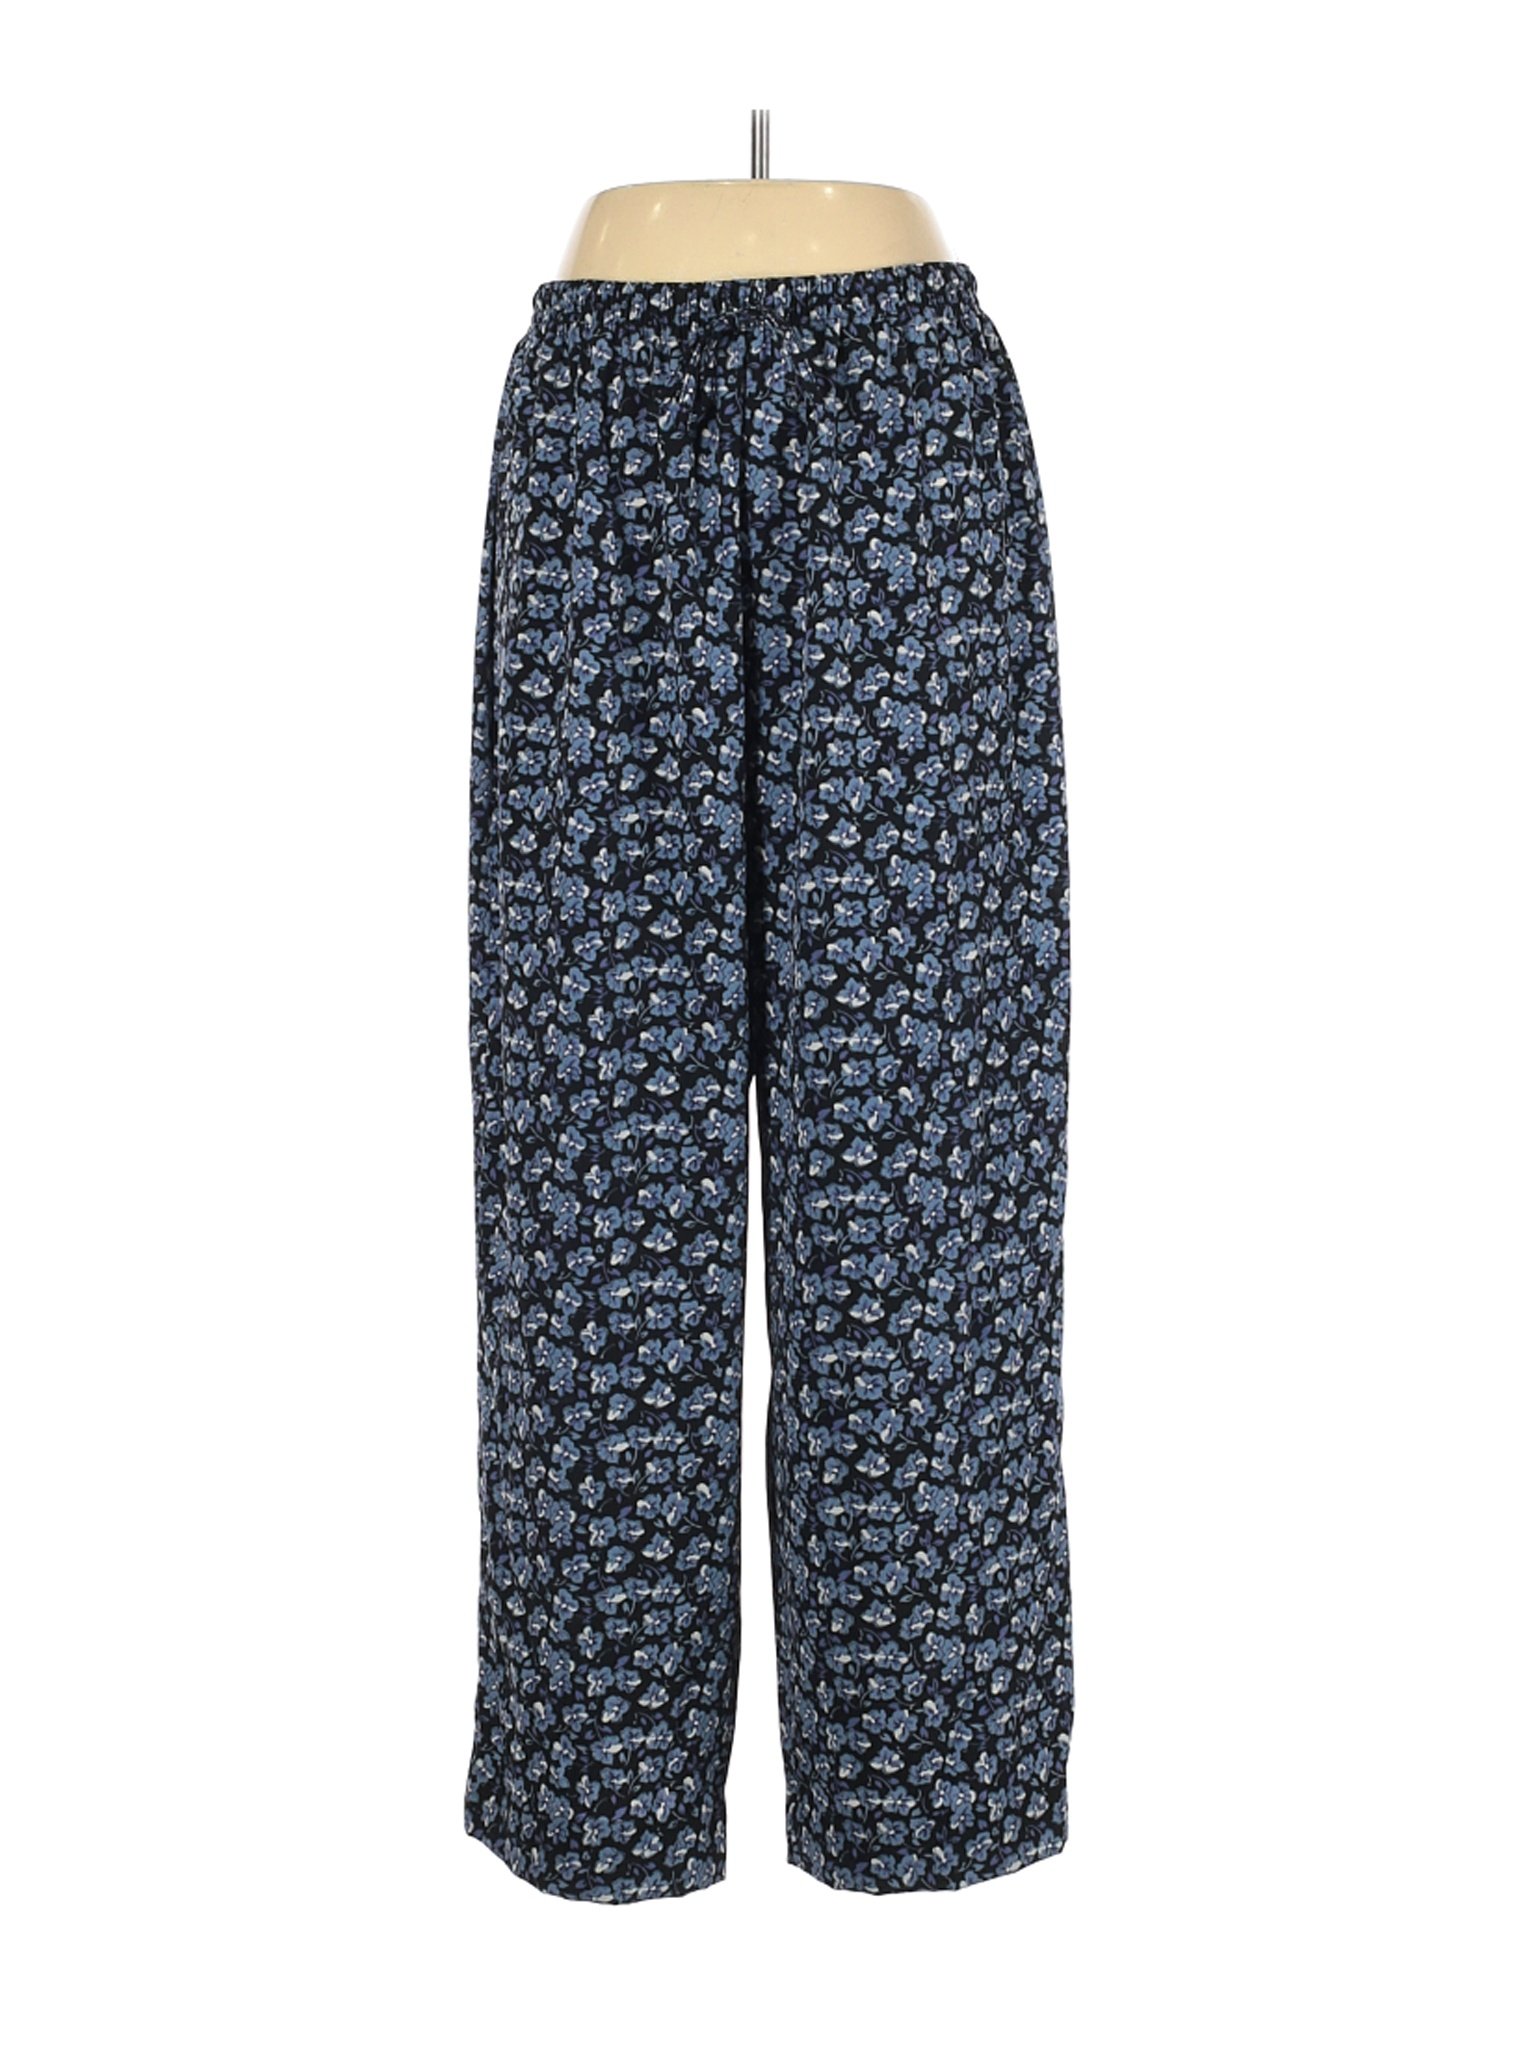 Fundamental Things Women Blue Casual Pants XL | eBay